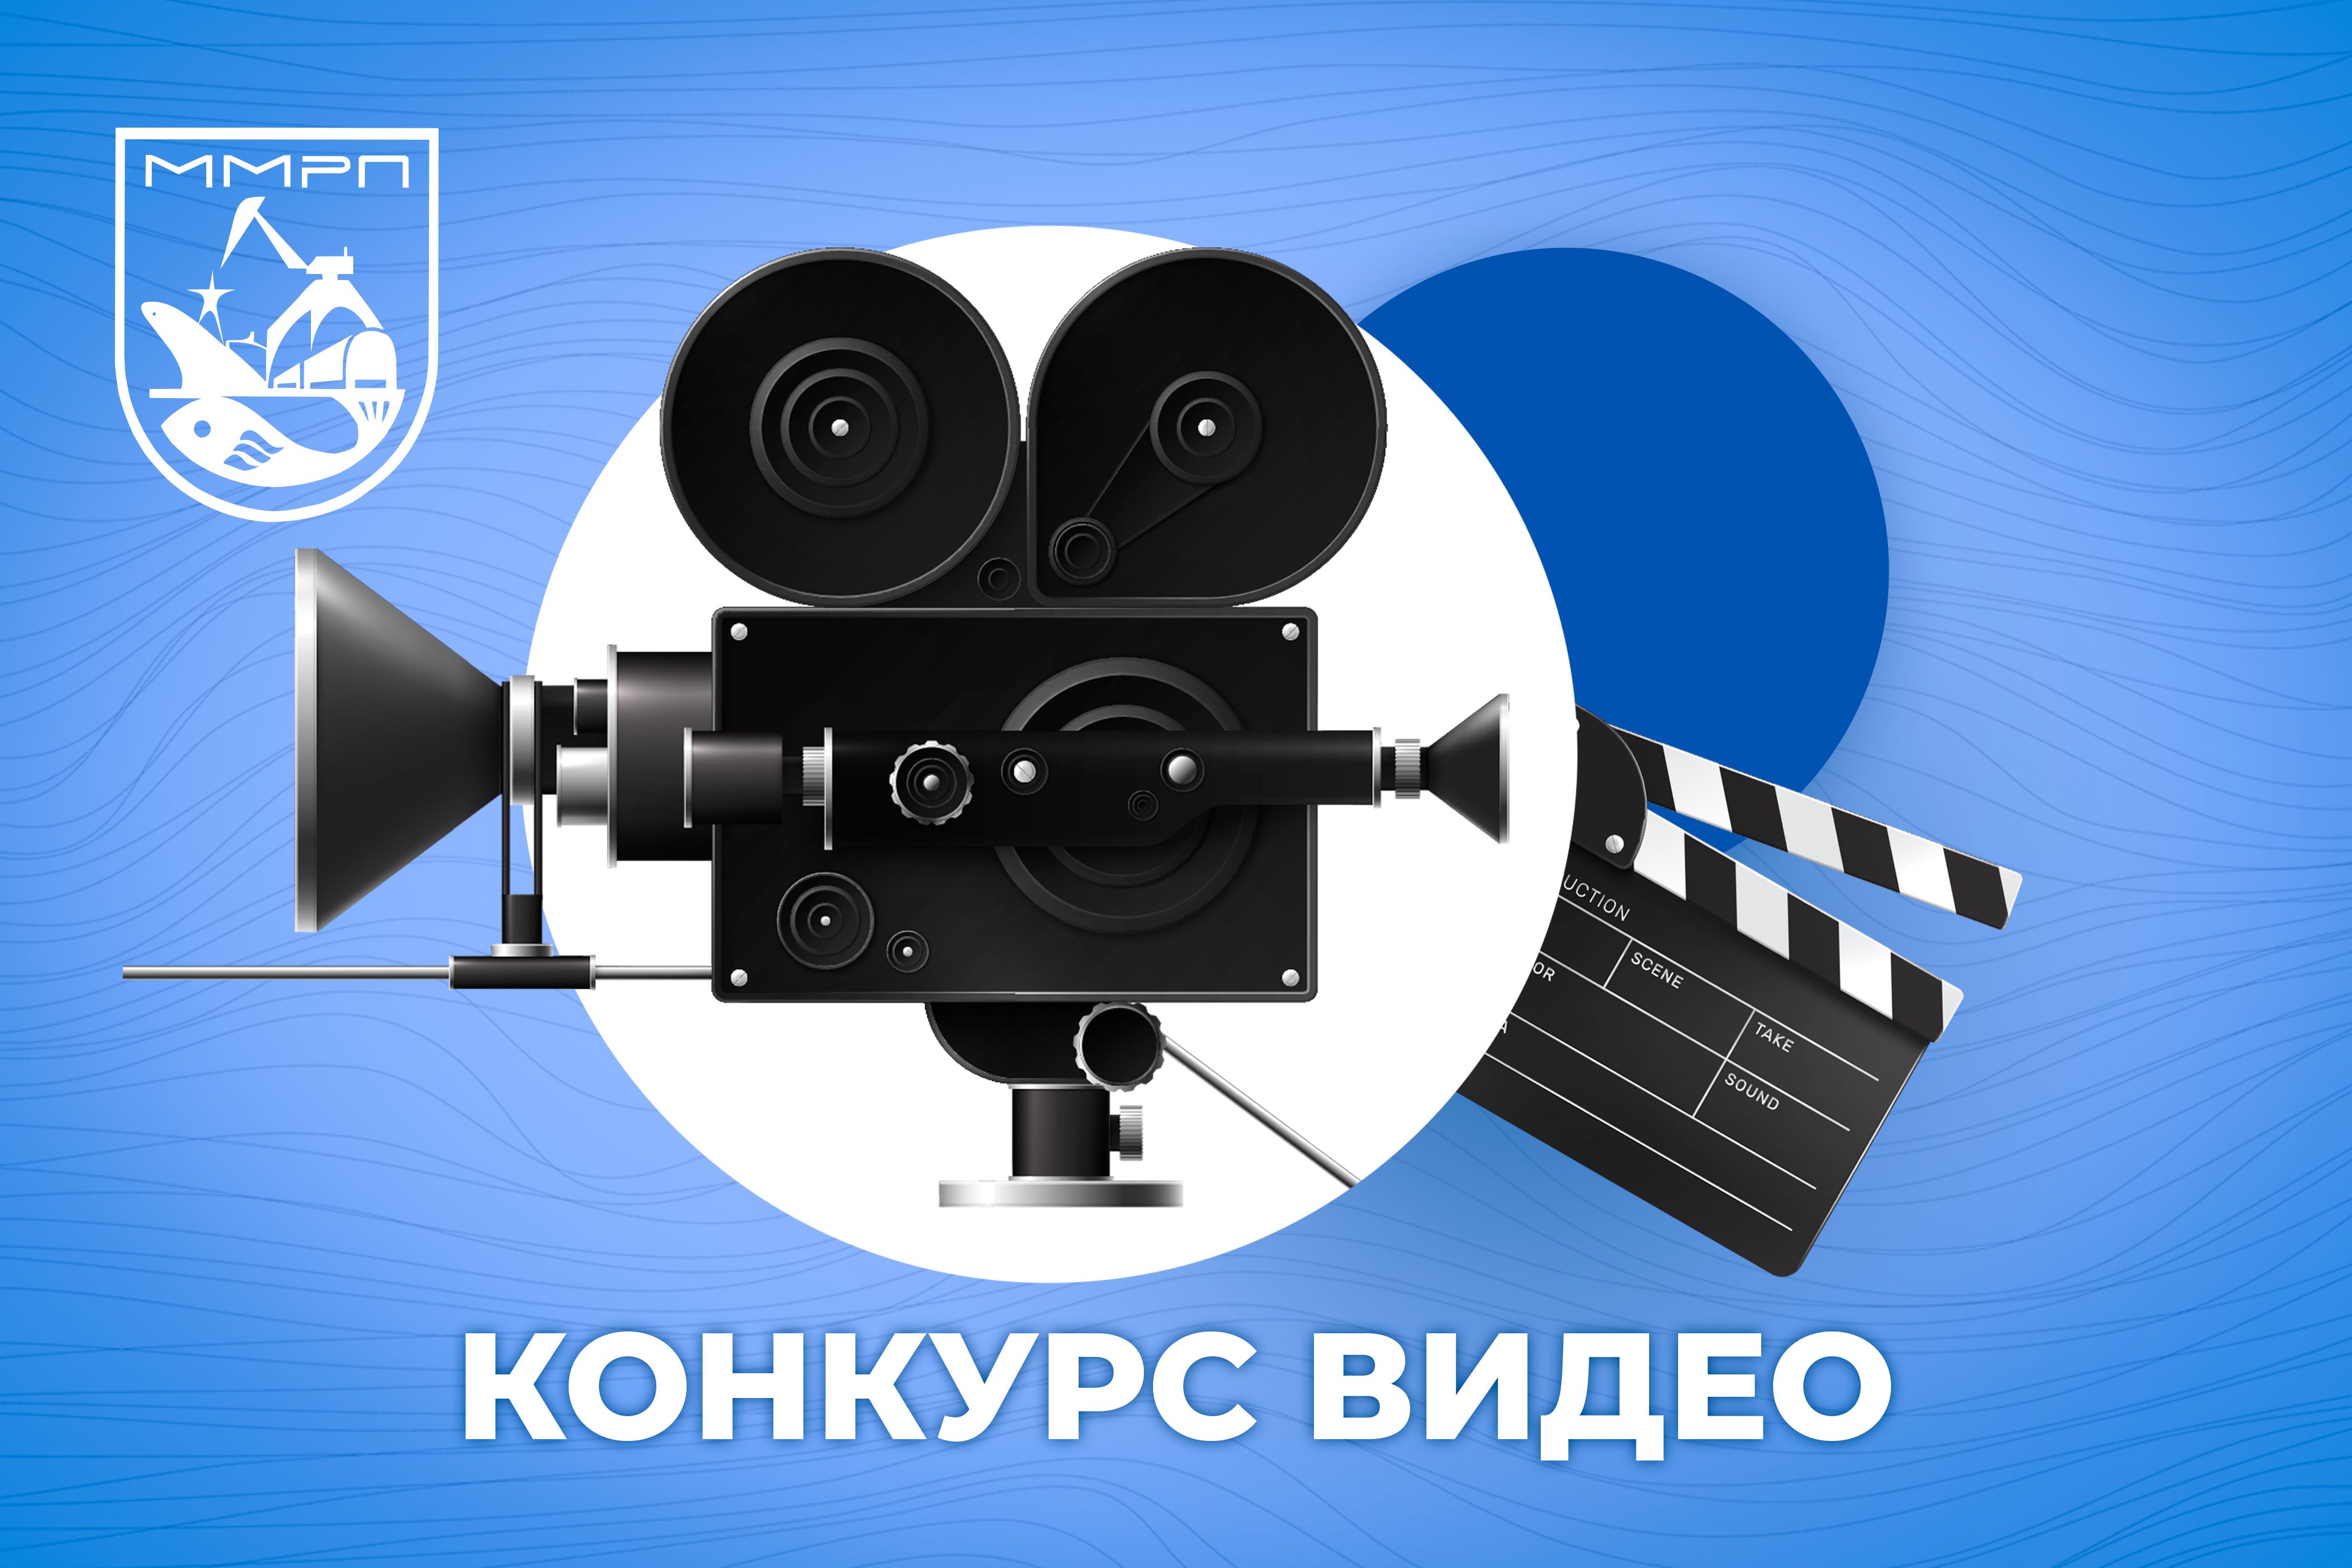 ММРП объявляет конкурс видеороликов среди сотрудников